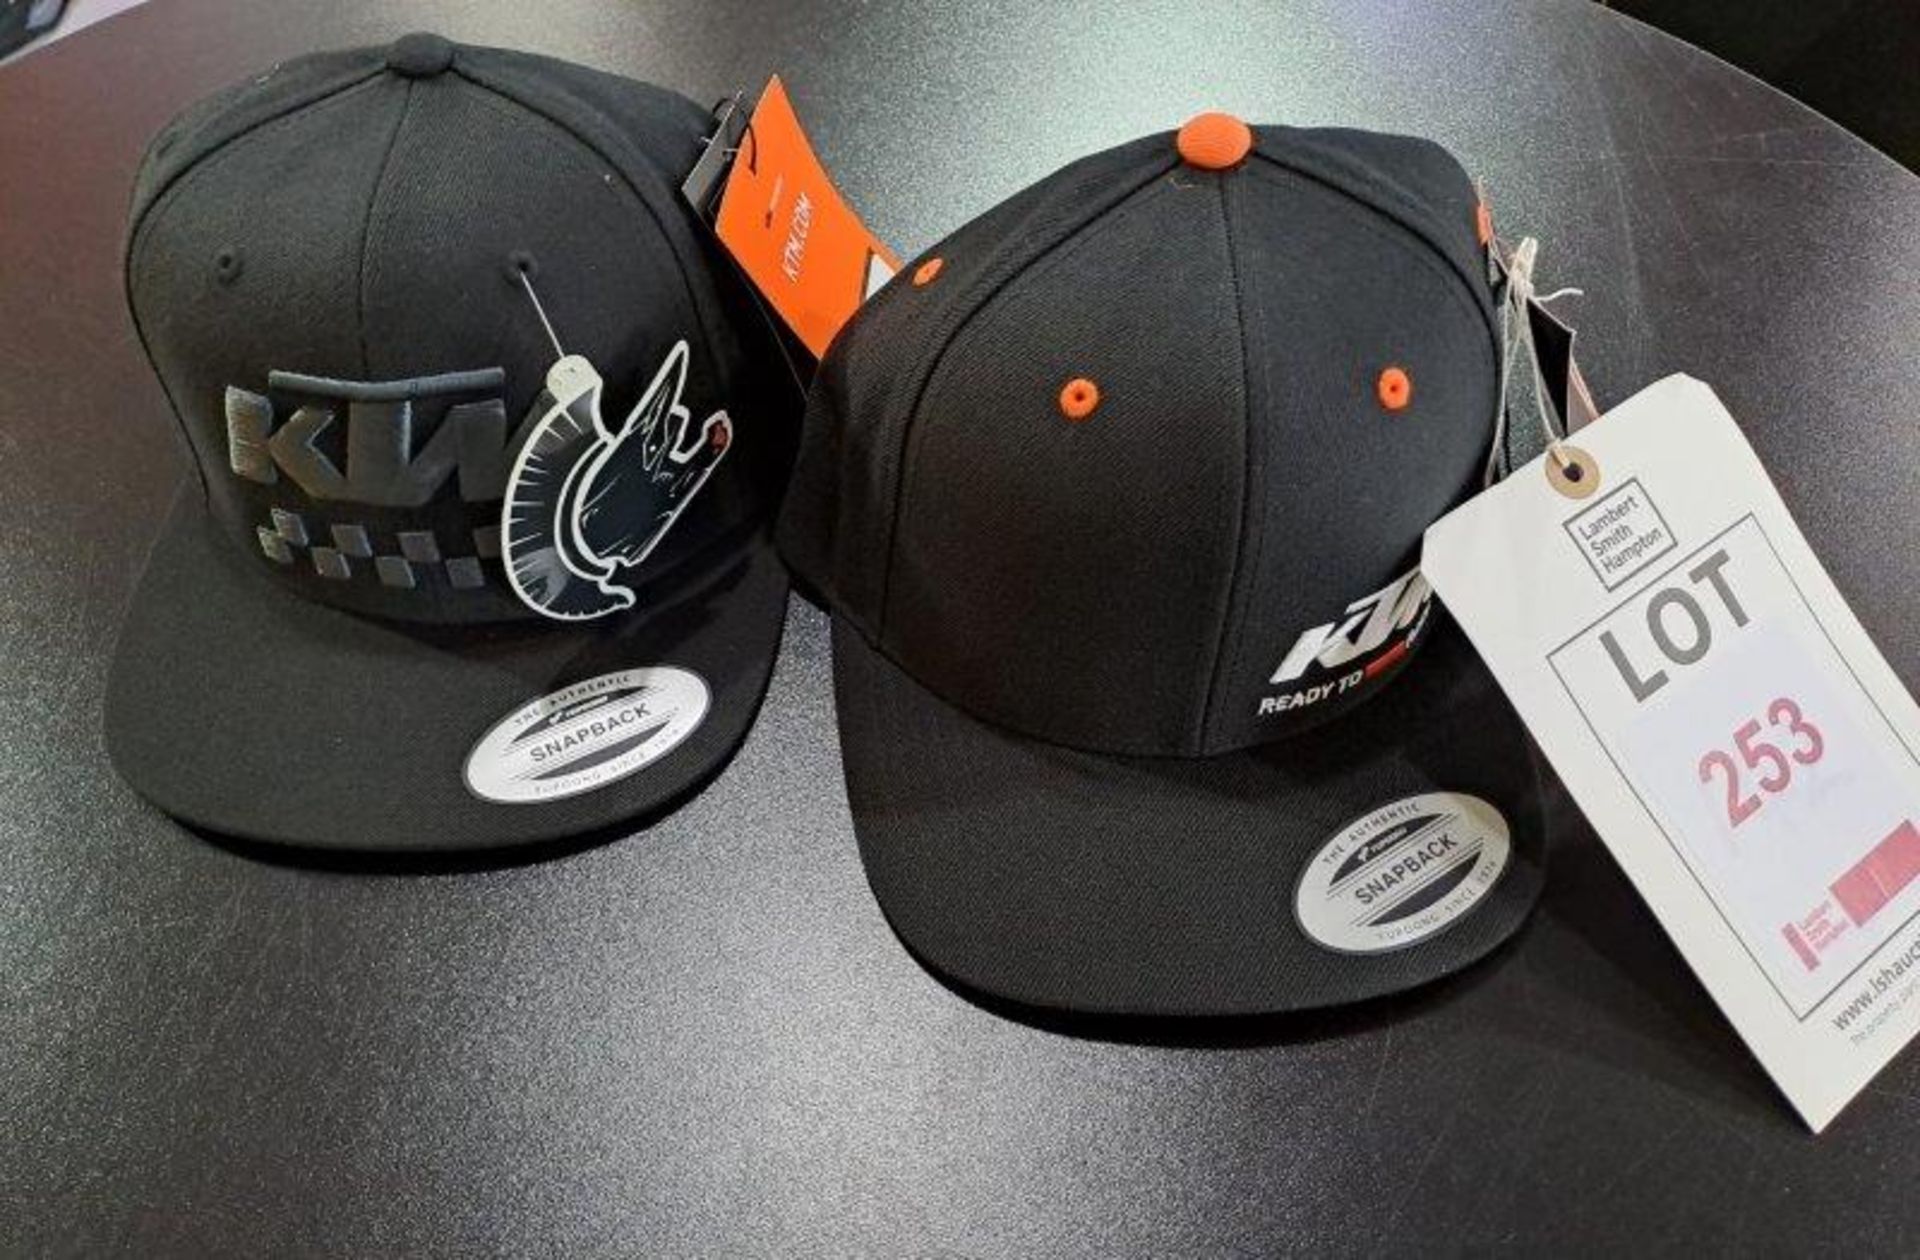 2 x KTM Baseball Caps